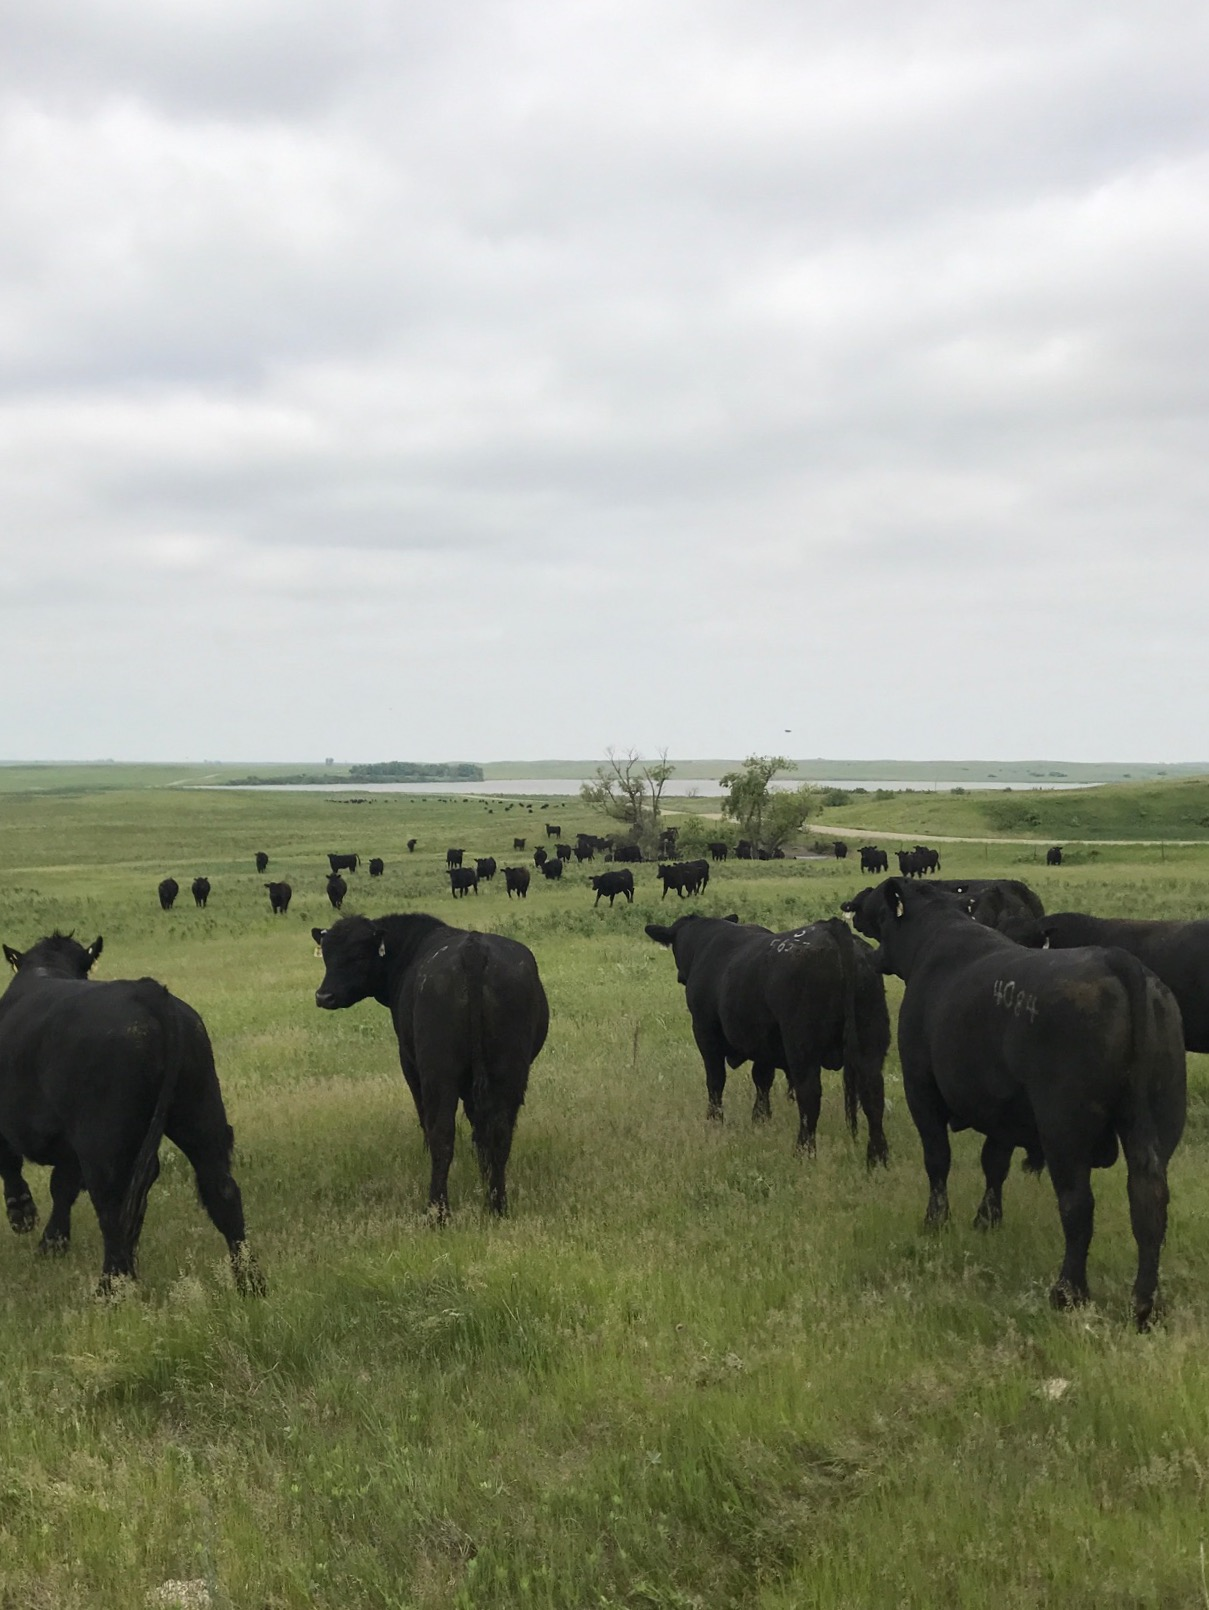 Morning Ag News, September 28, 2021: New Executive Director to lead South Dakota Cattlemen's Association starting October 1